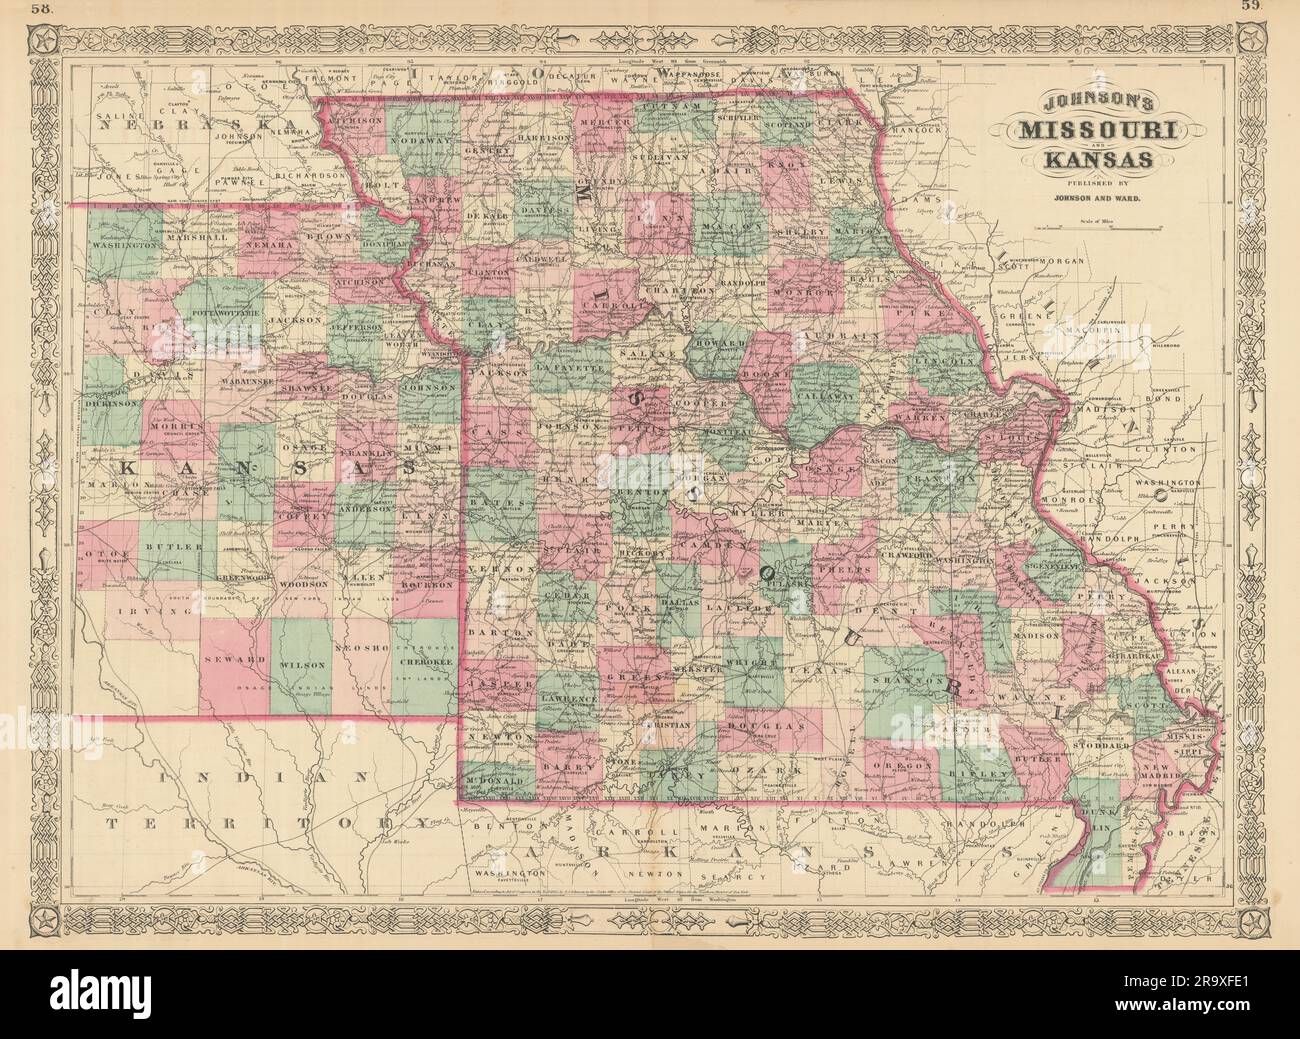 Johnson's Missouri & Kansas. US state map showing counties 1866 old Stock Photo